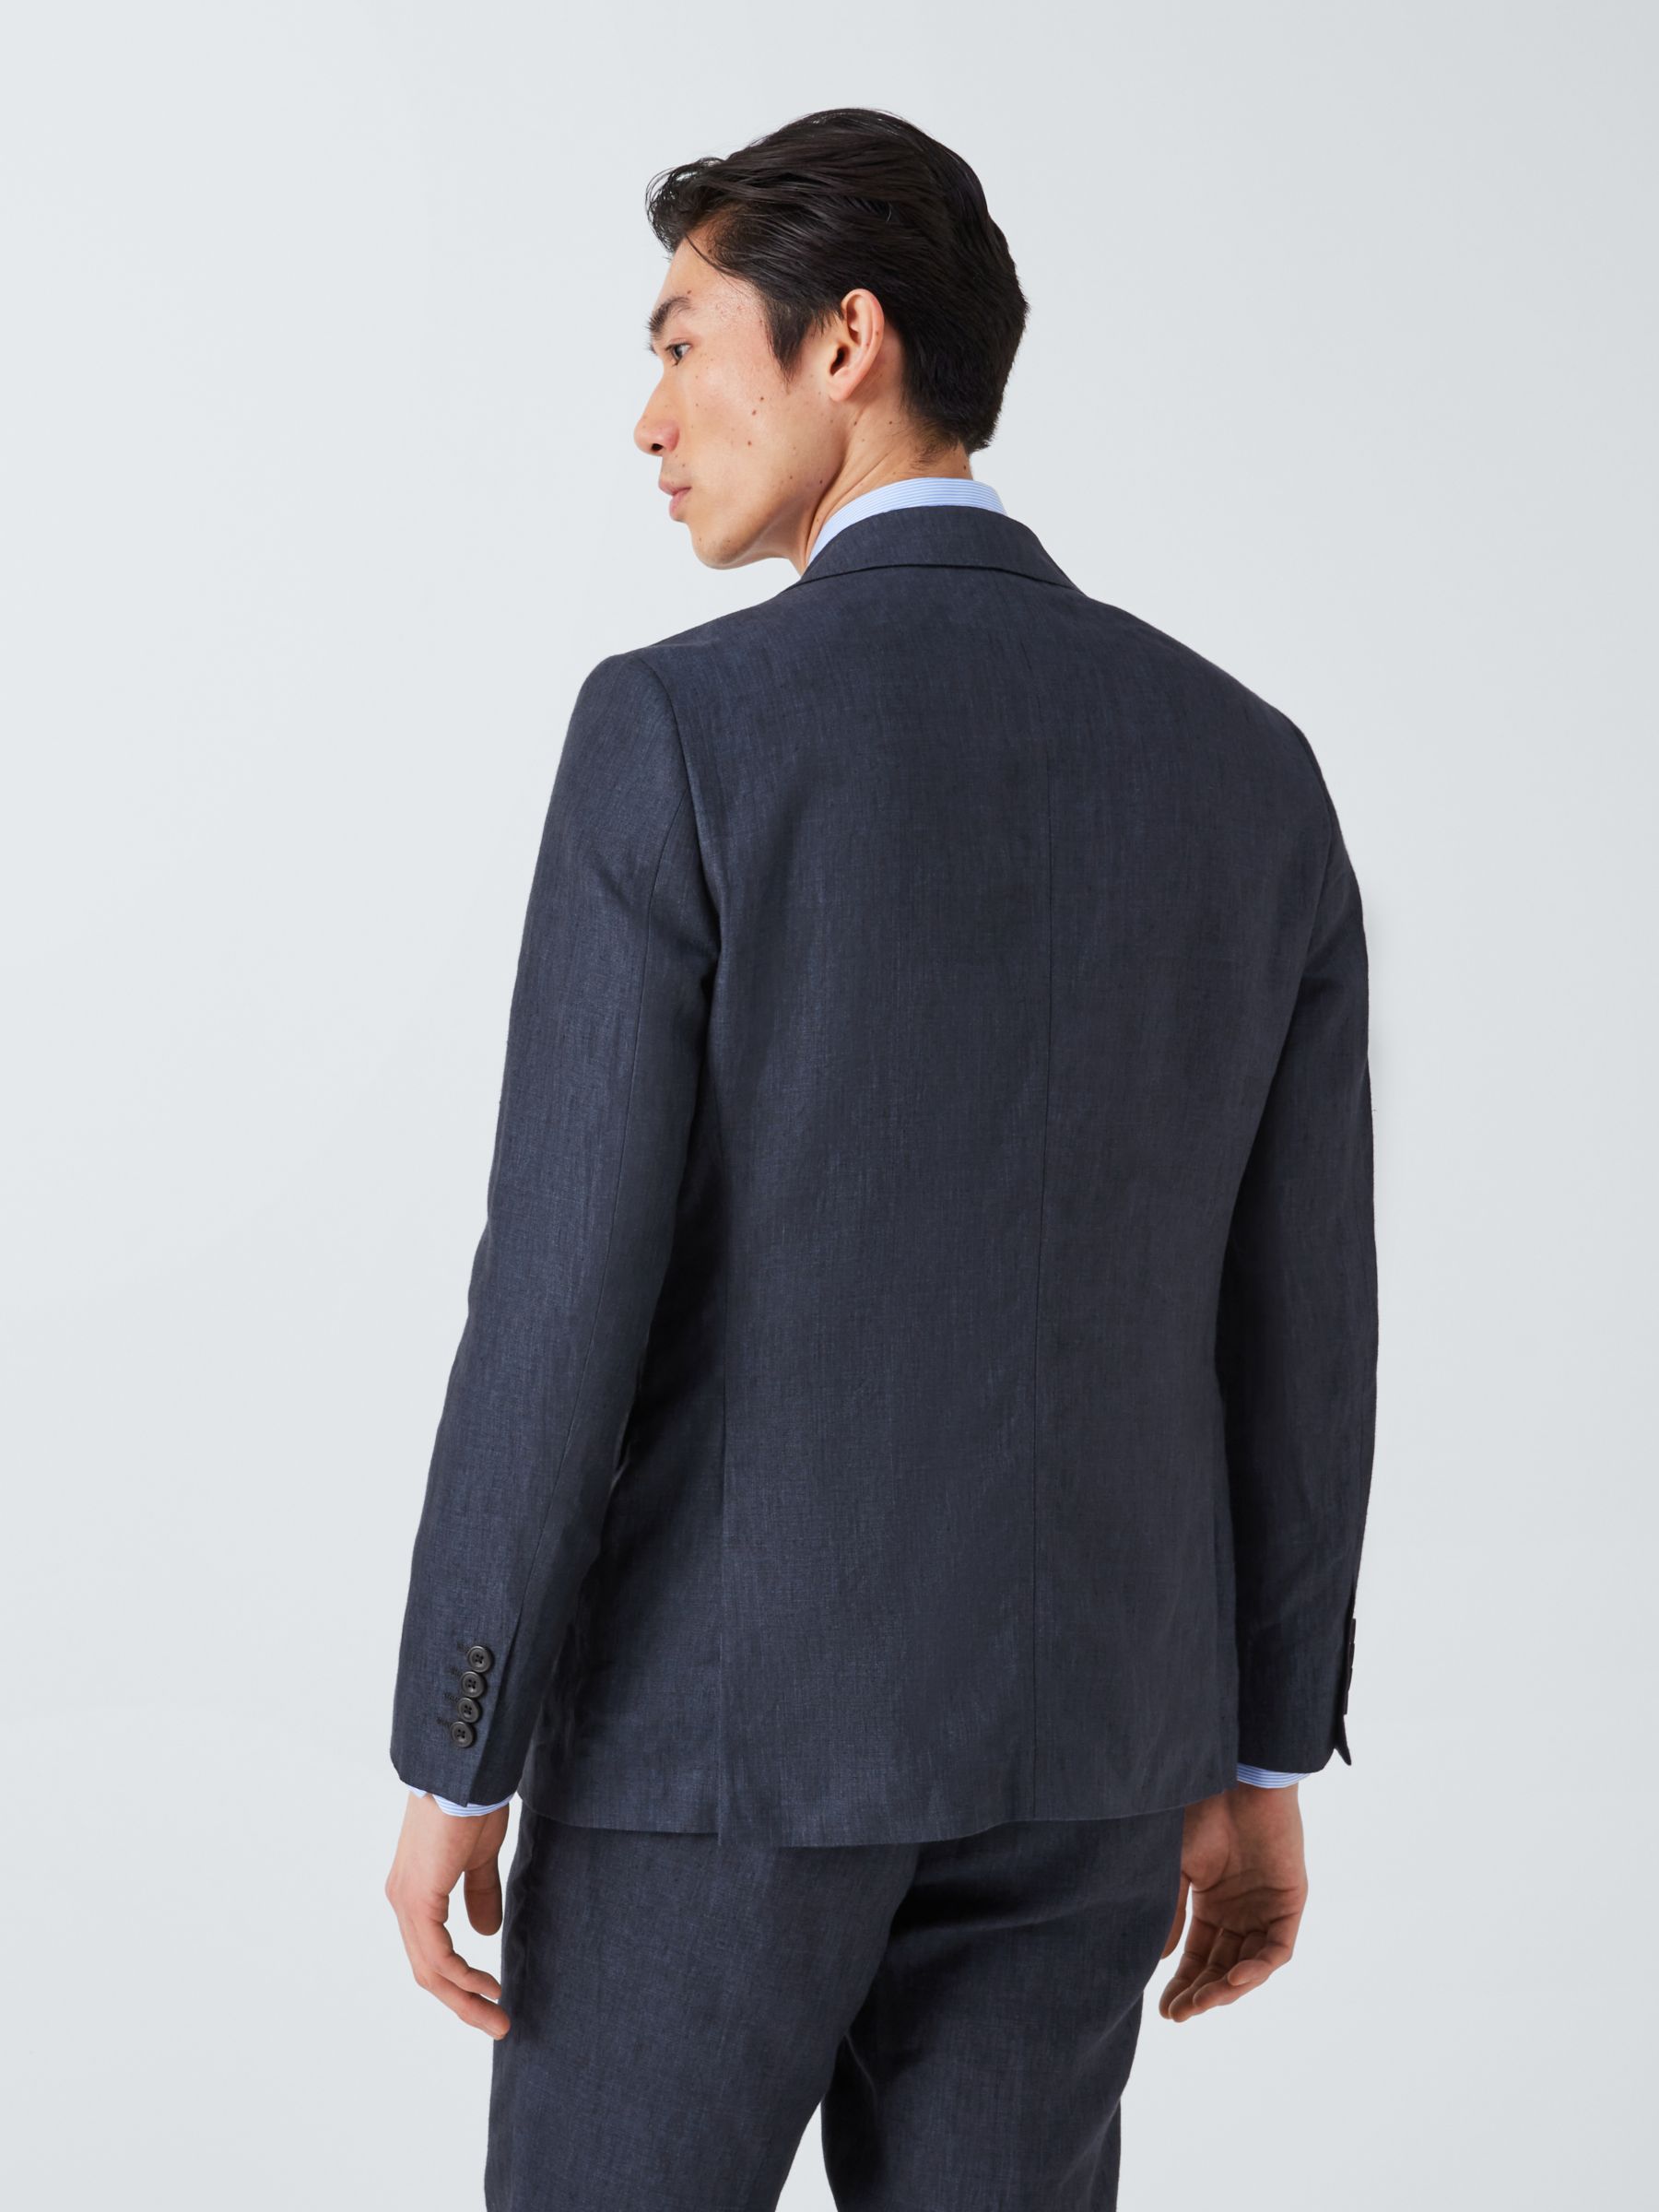 John Lewis Cambridge Linen Single Breasted Regular Fit Suit Jacket, Navy, 36R